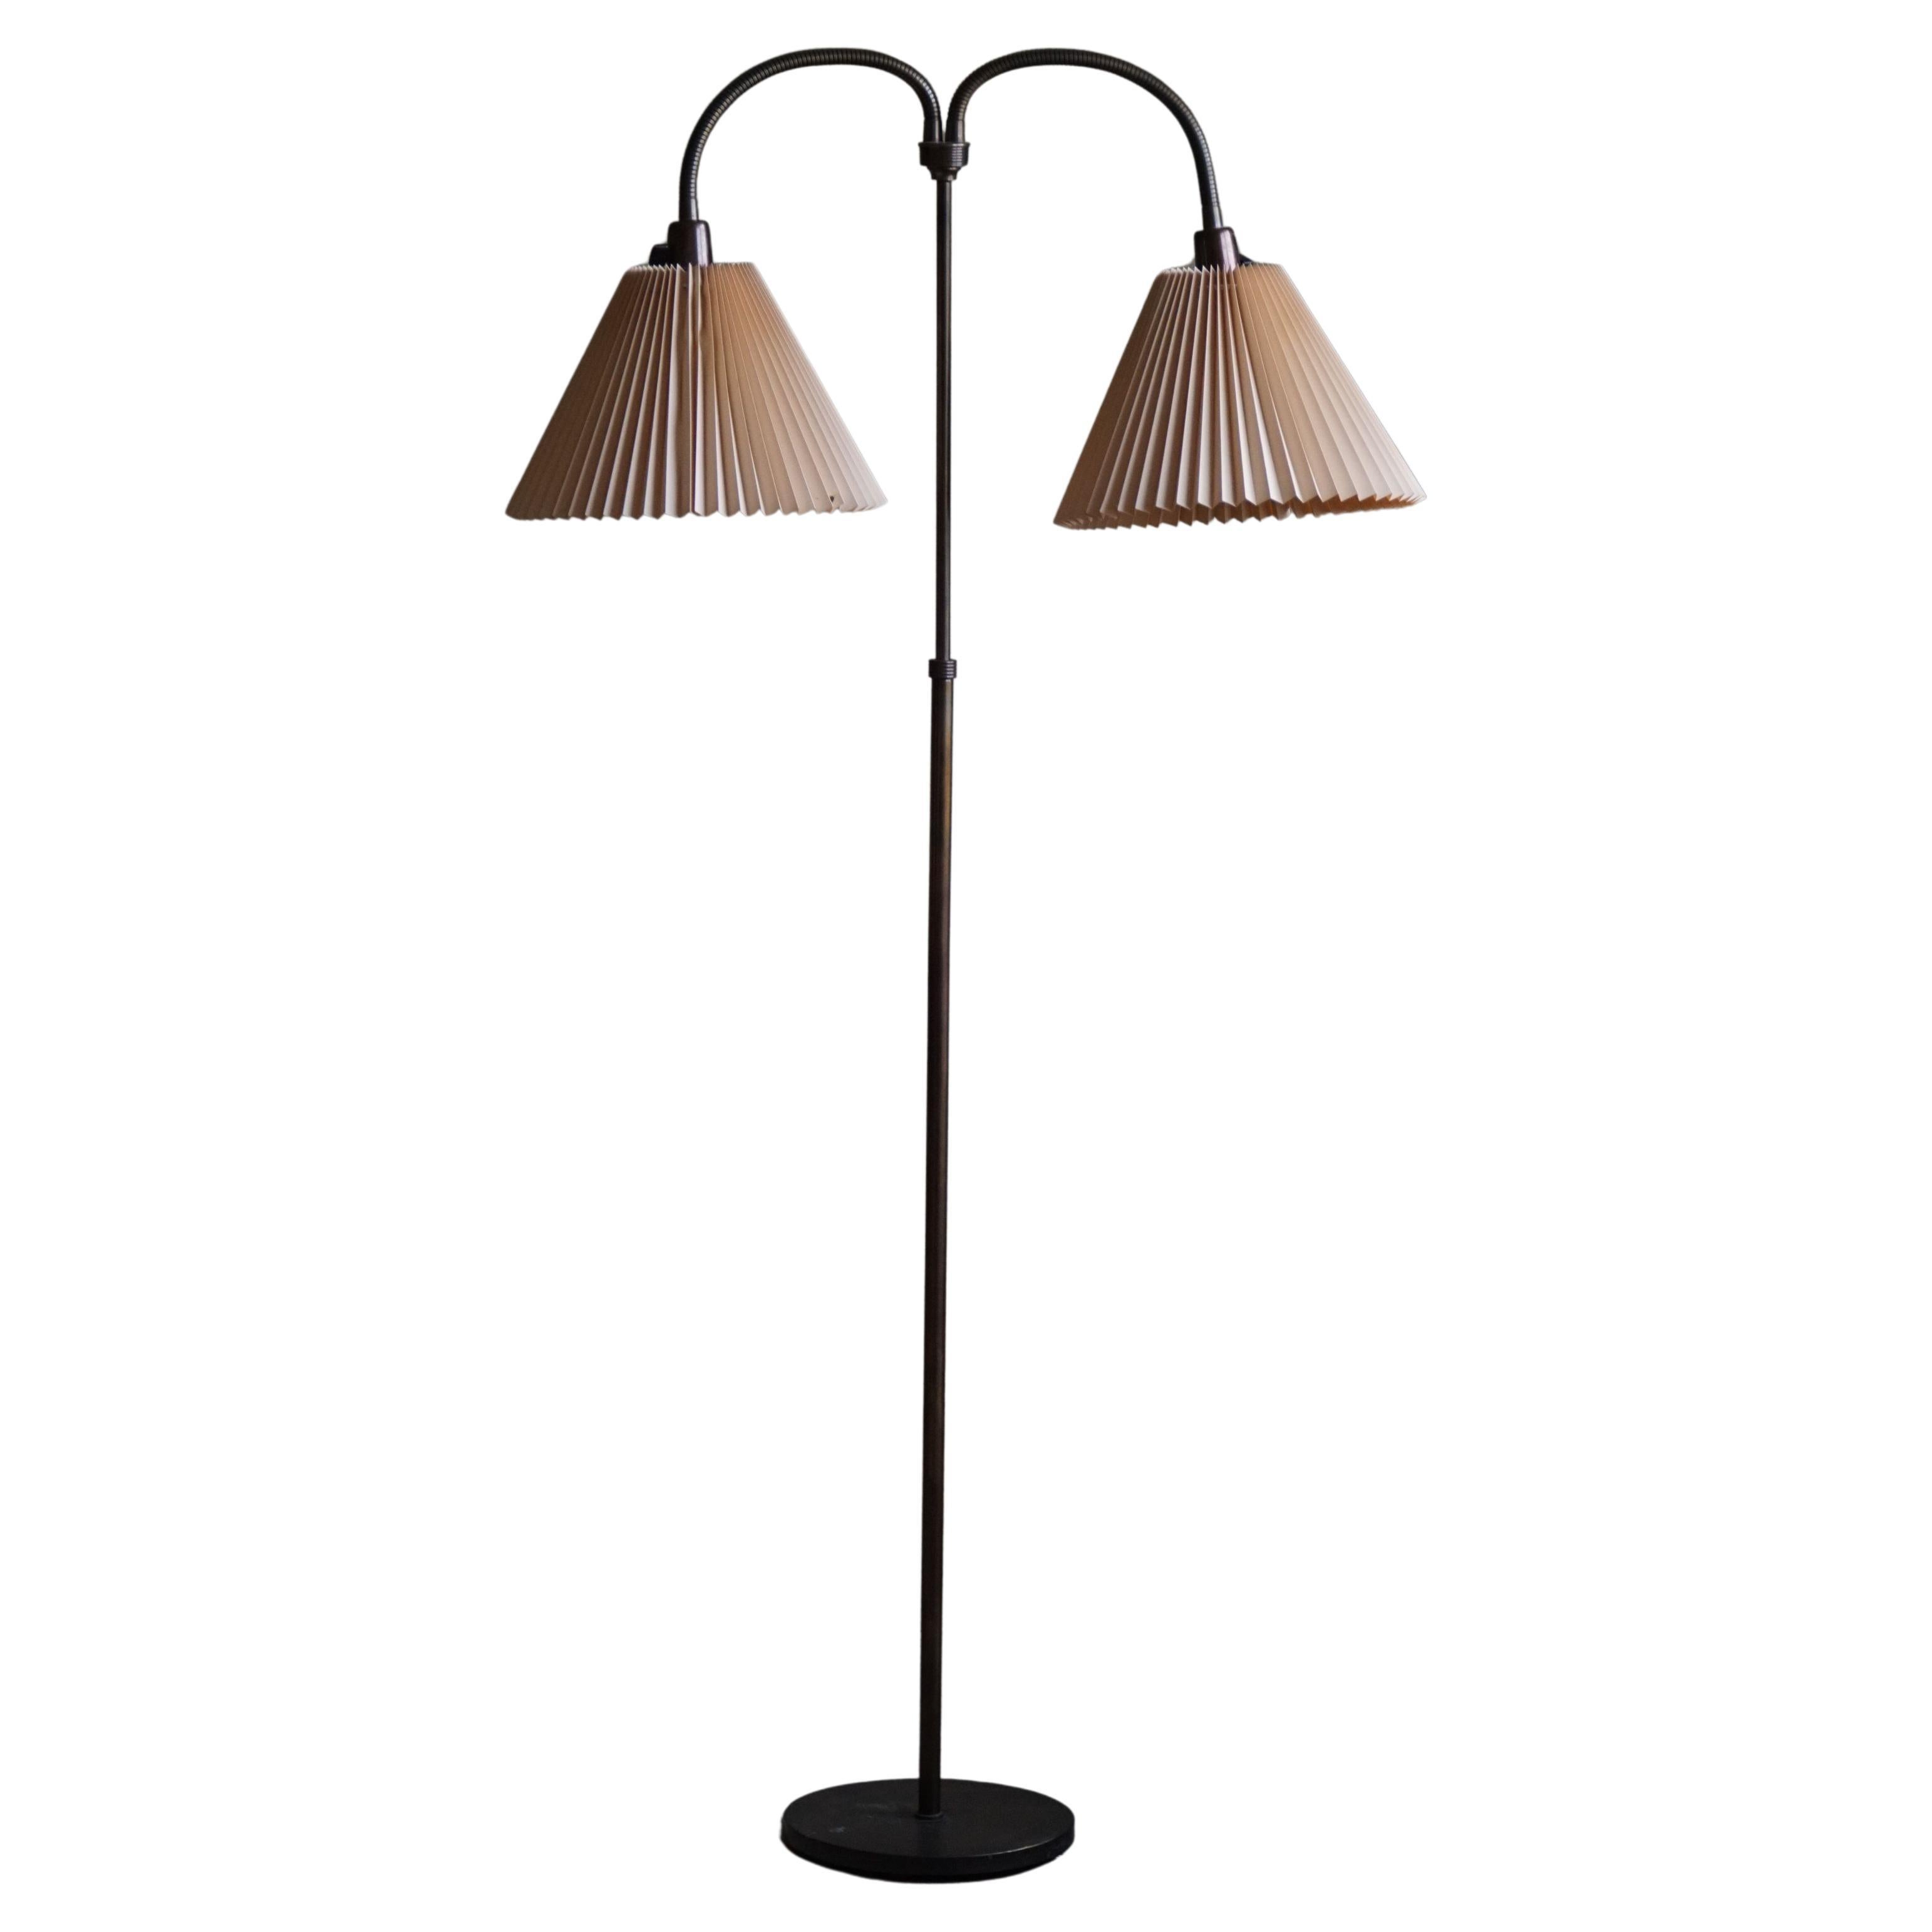 Danish Modern, Adjustable Swing Arm Floor Lamp in Brass, Mid Century, 1950s For Sale